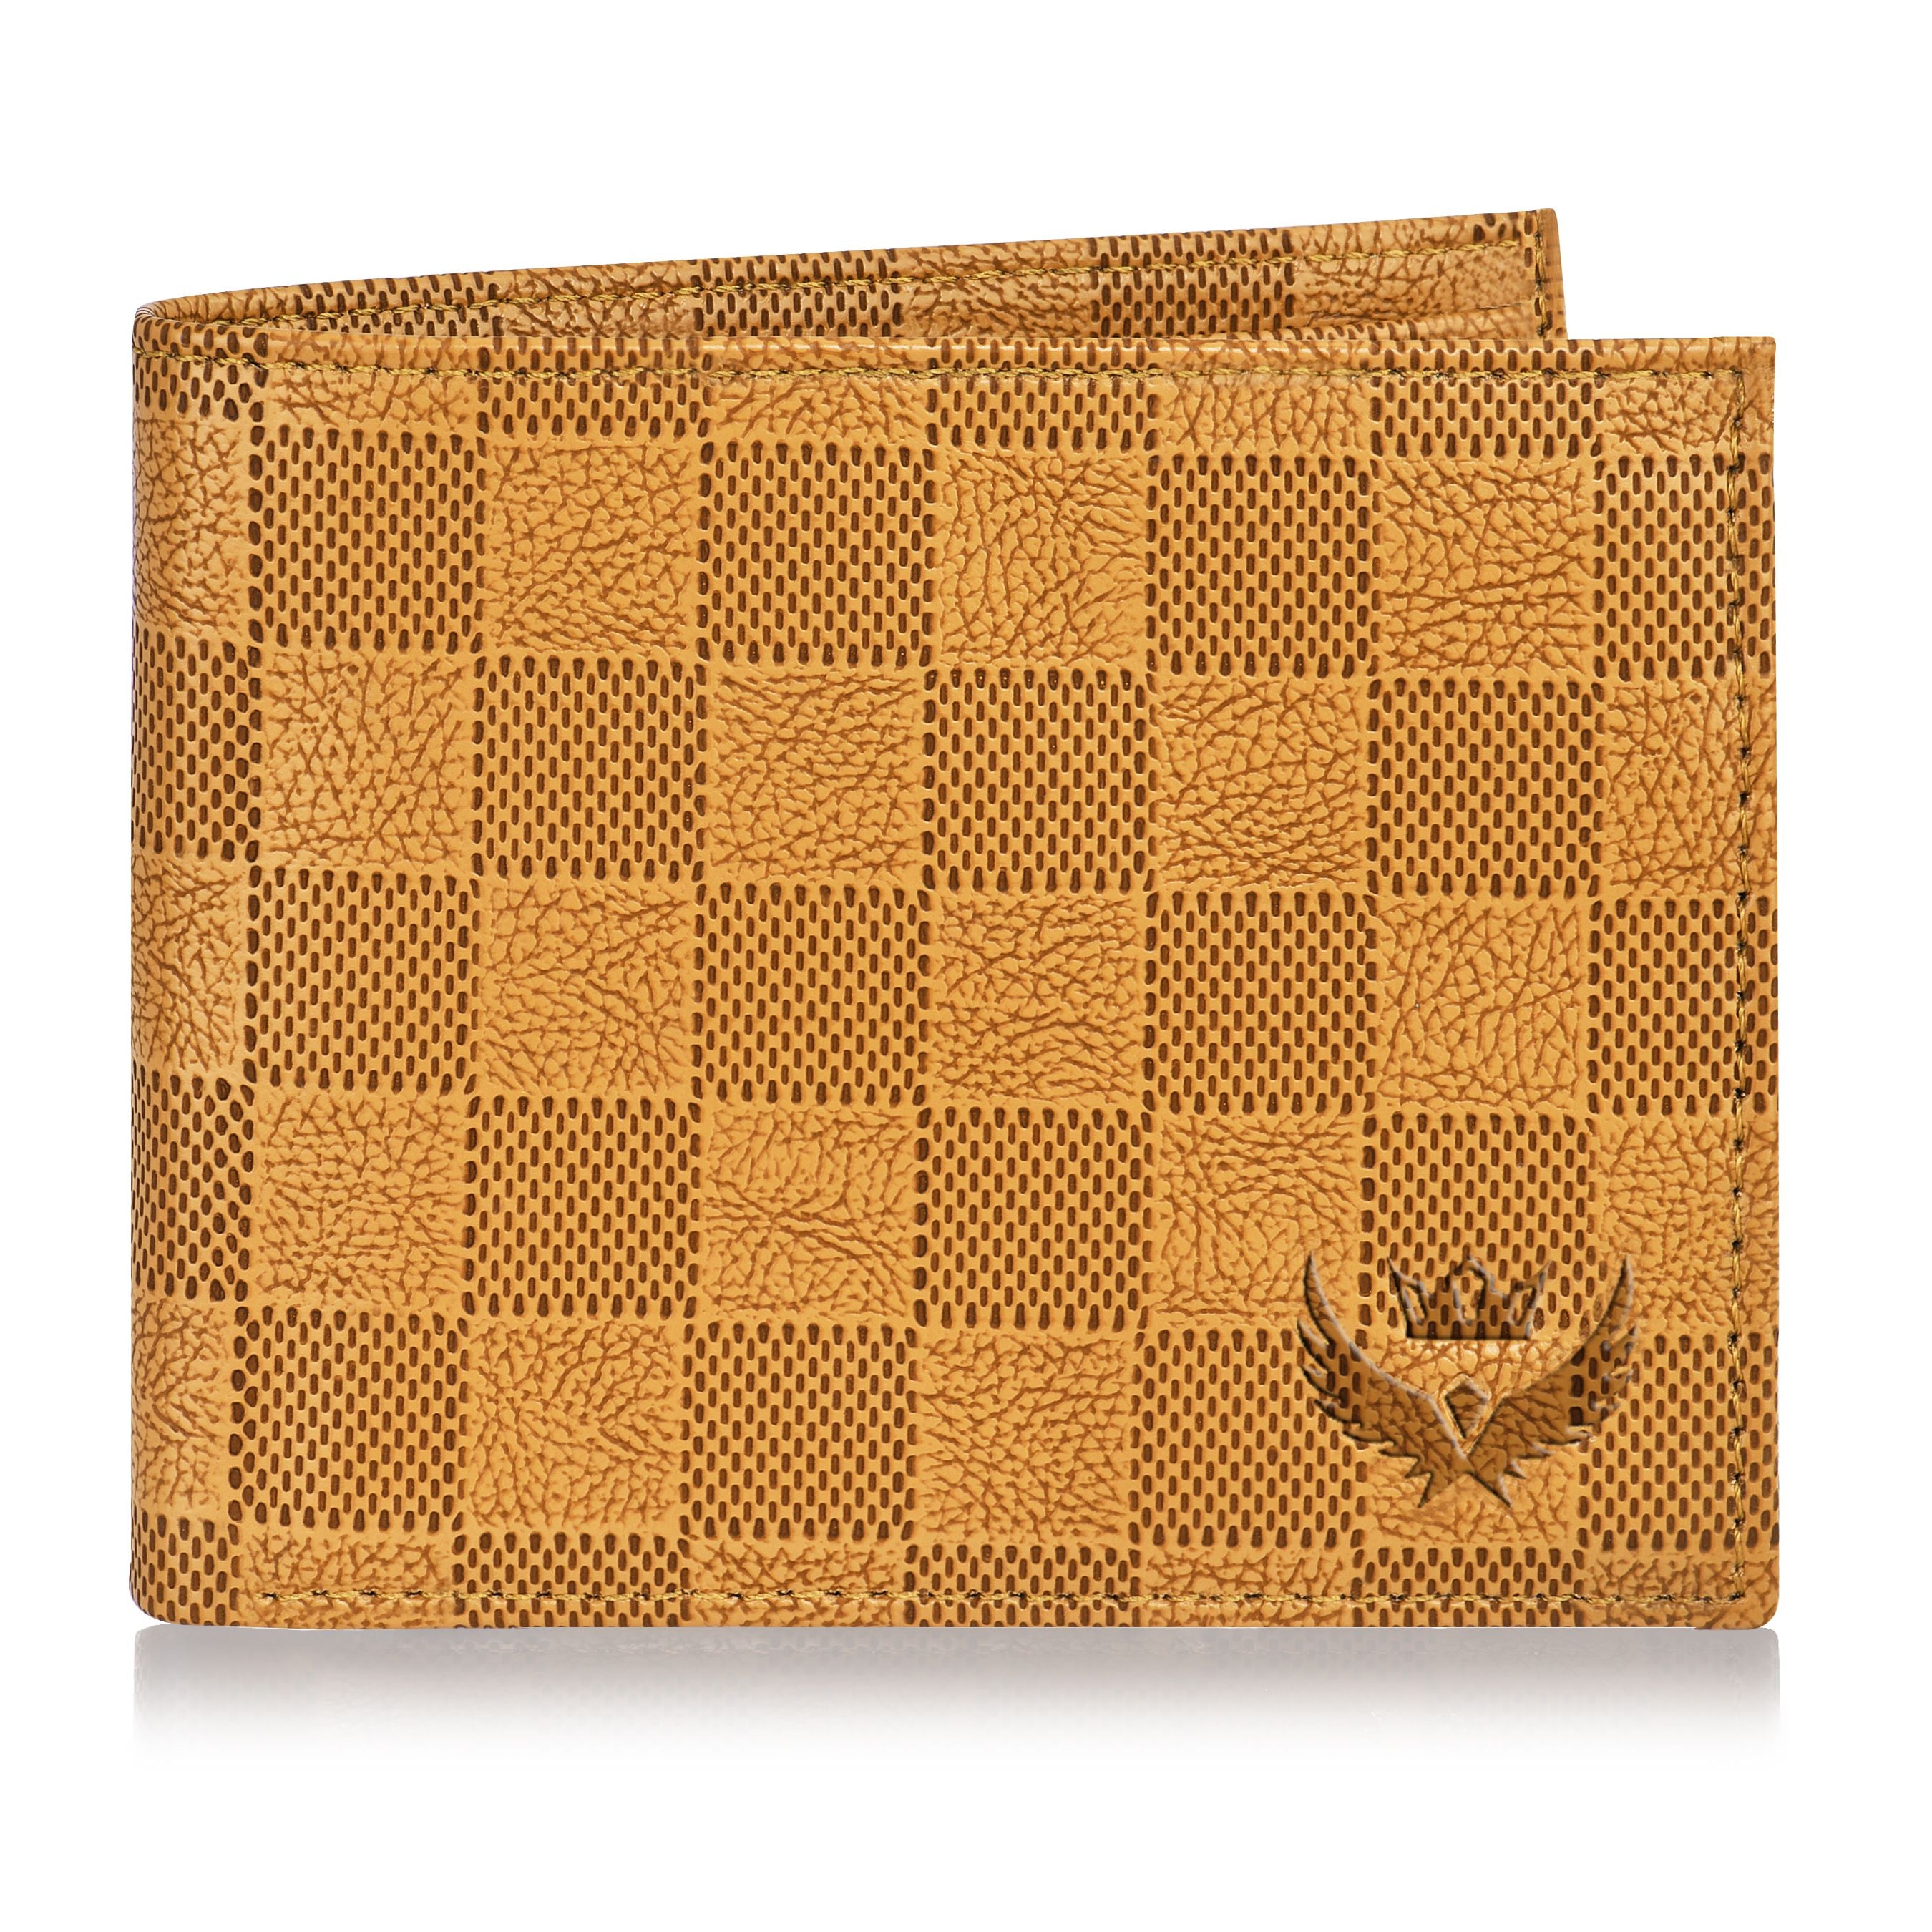 Lorenz Men's Brown Leather Wallet